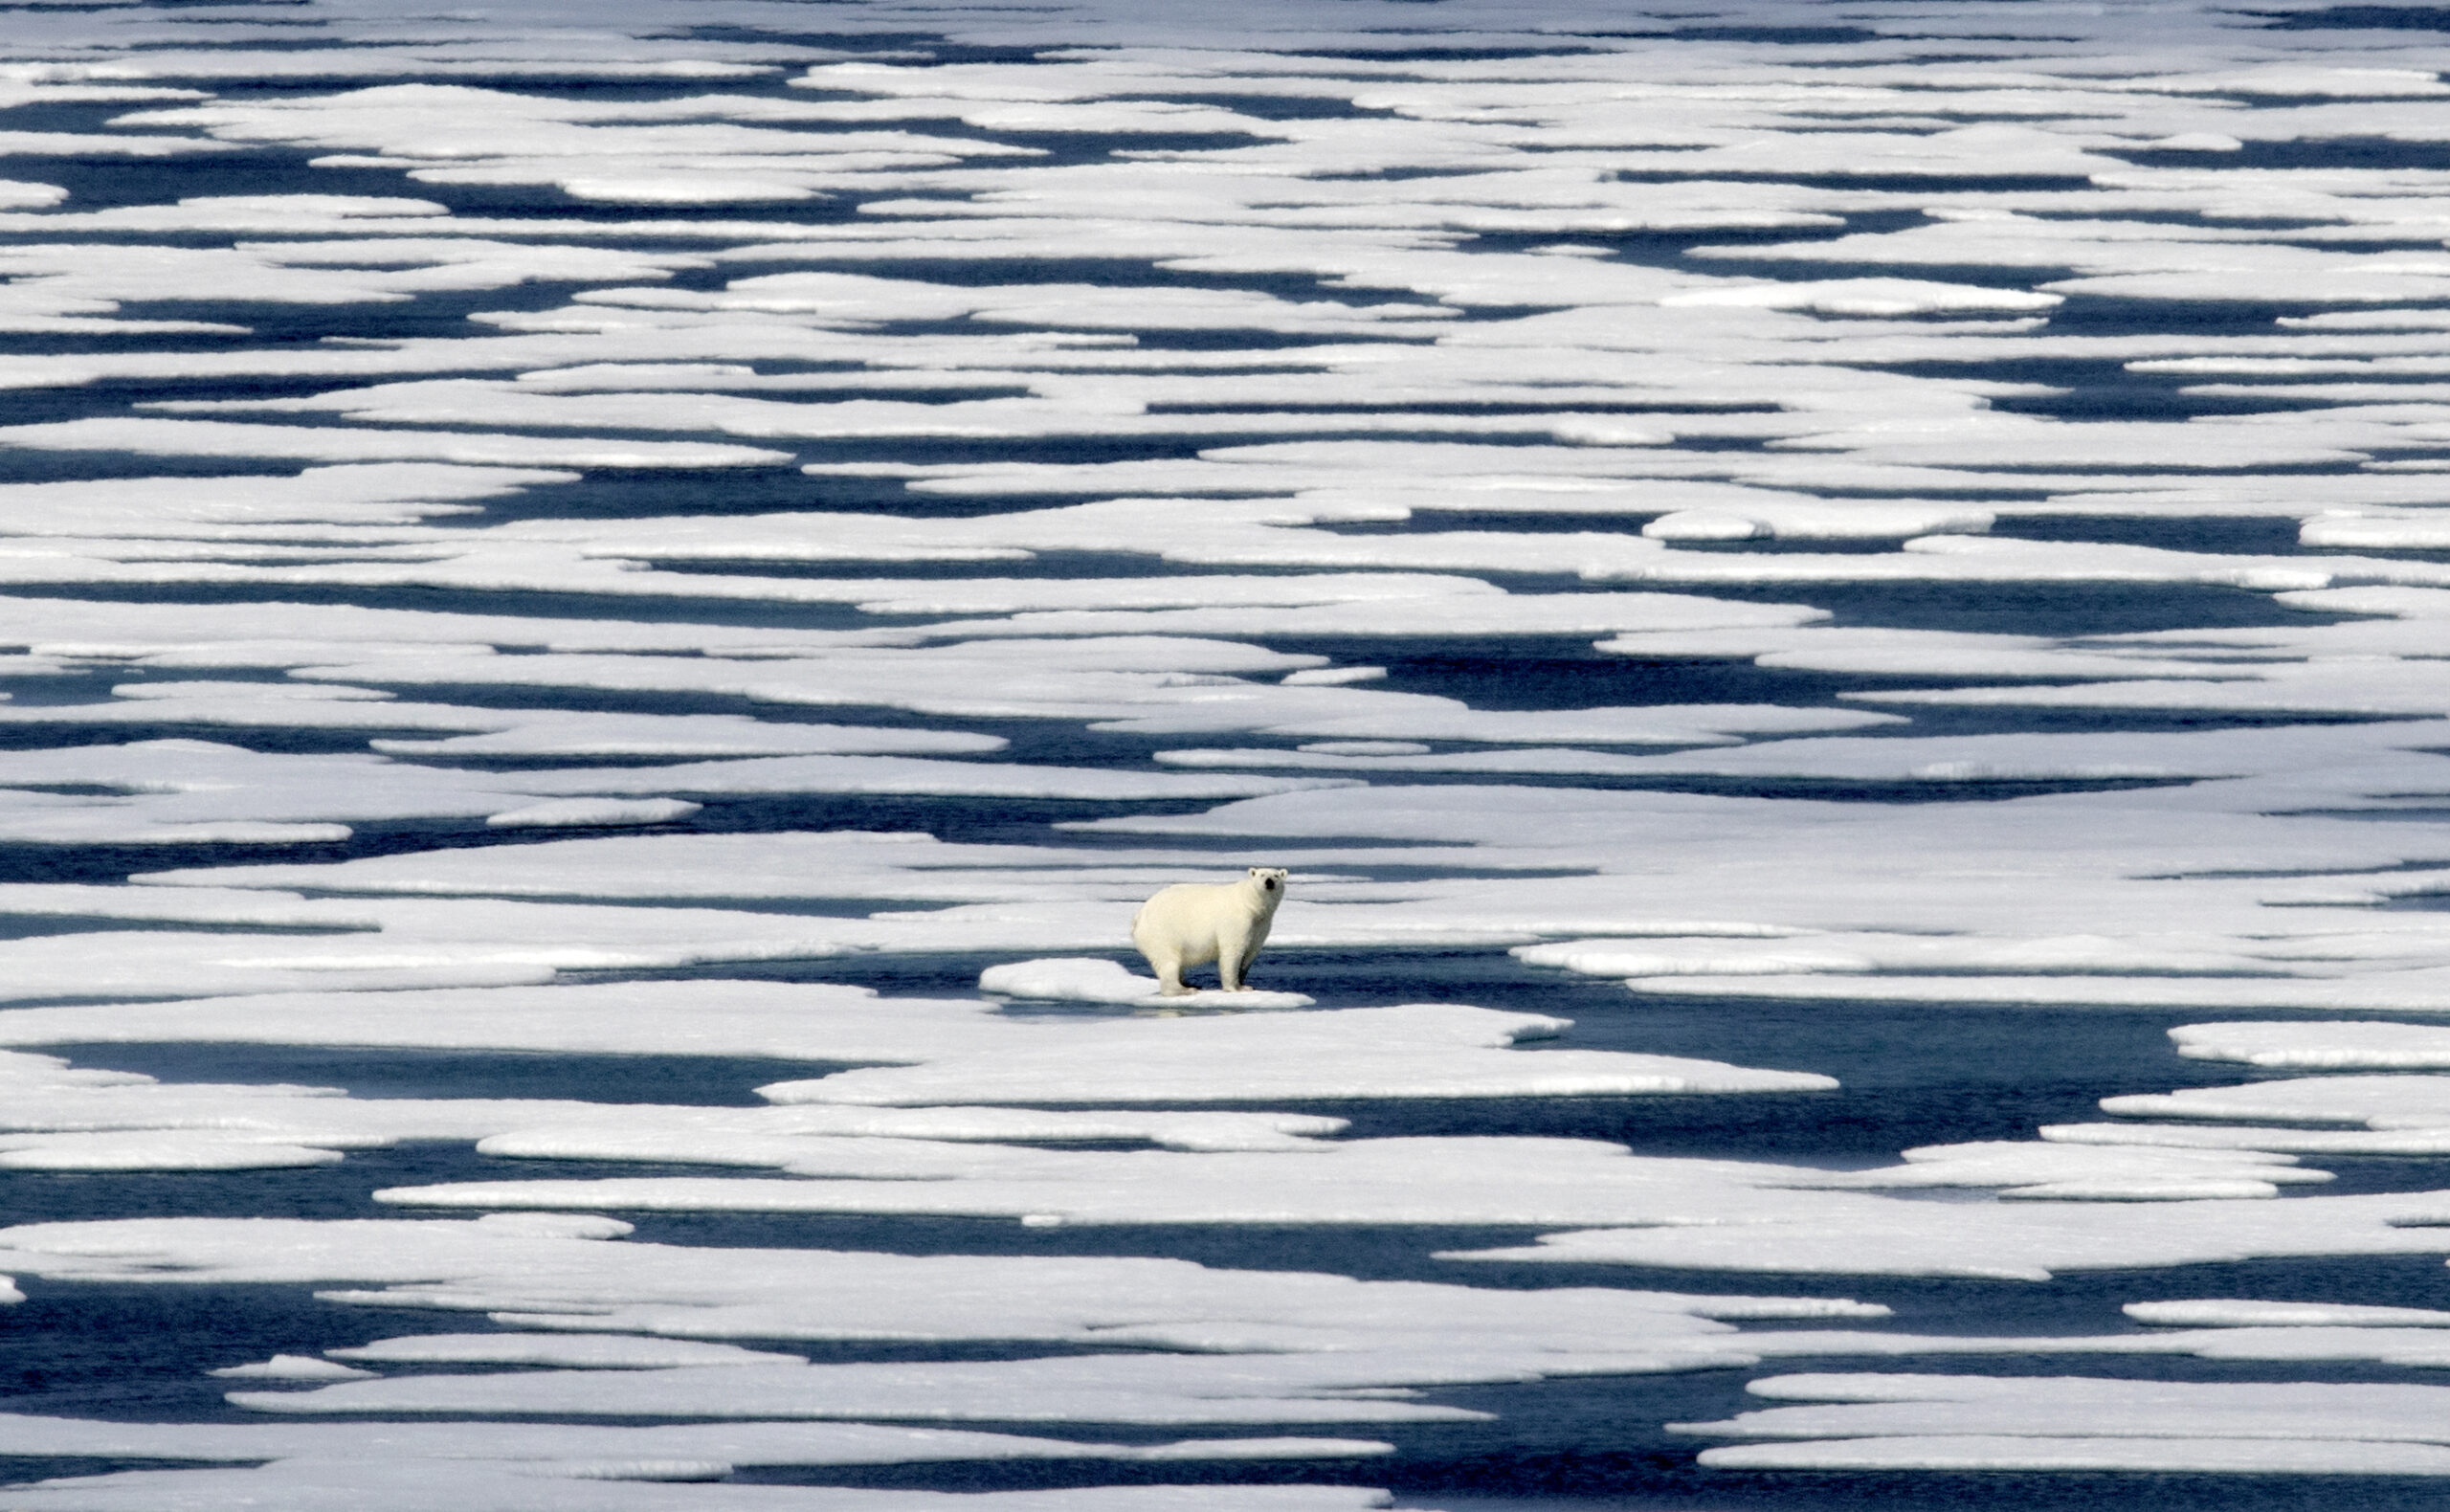 A polar bear standing on ice in the Canadian Arctic Archipelago